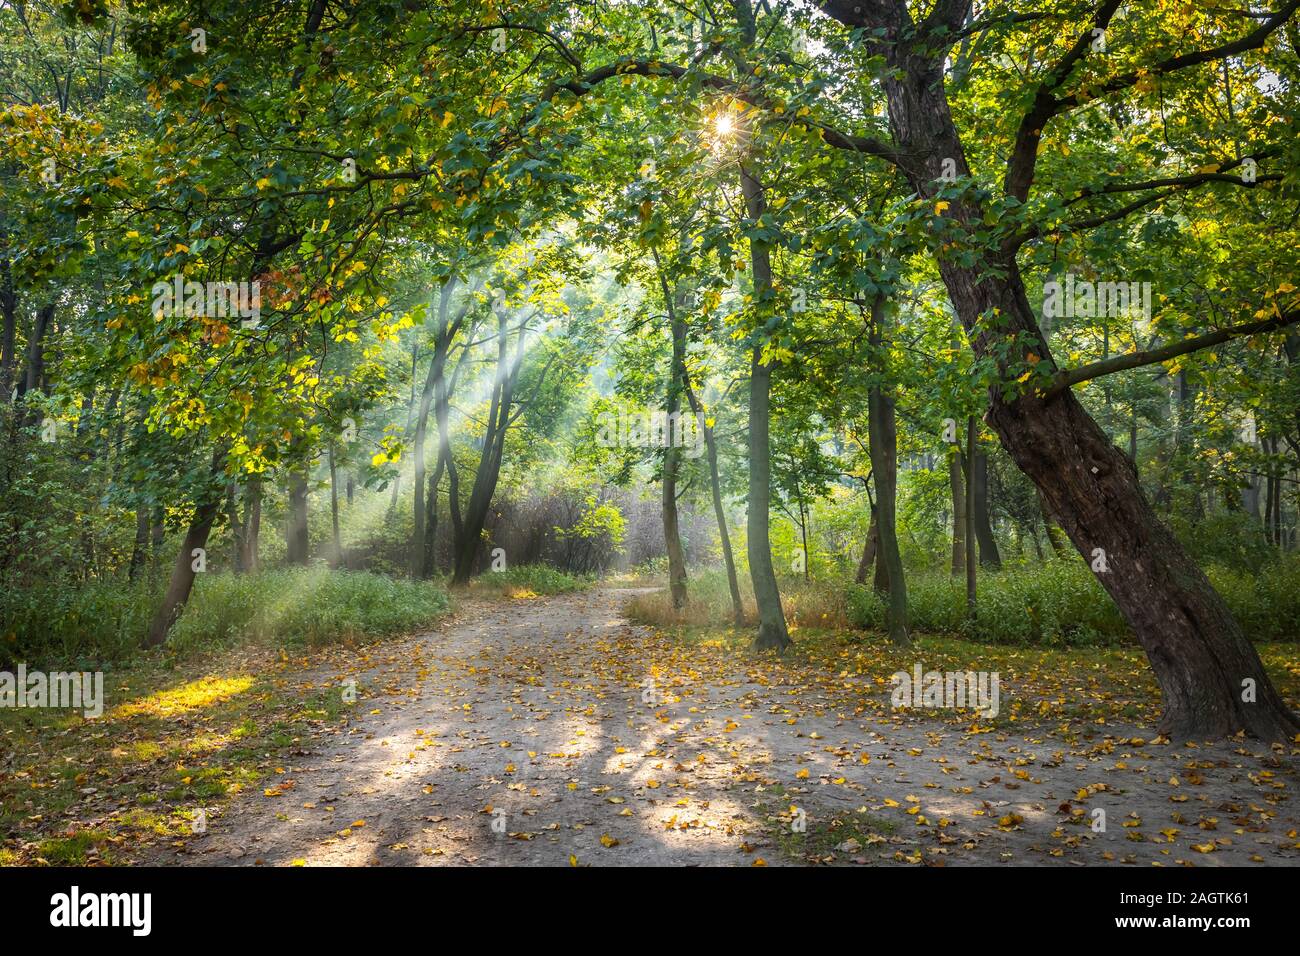 Walking path through a park illuminated by wonderful sun beams – stock image Stock Photo